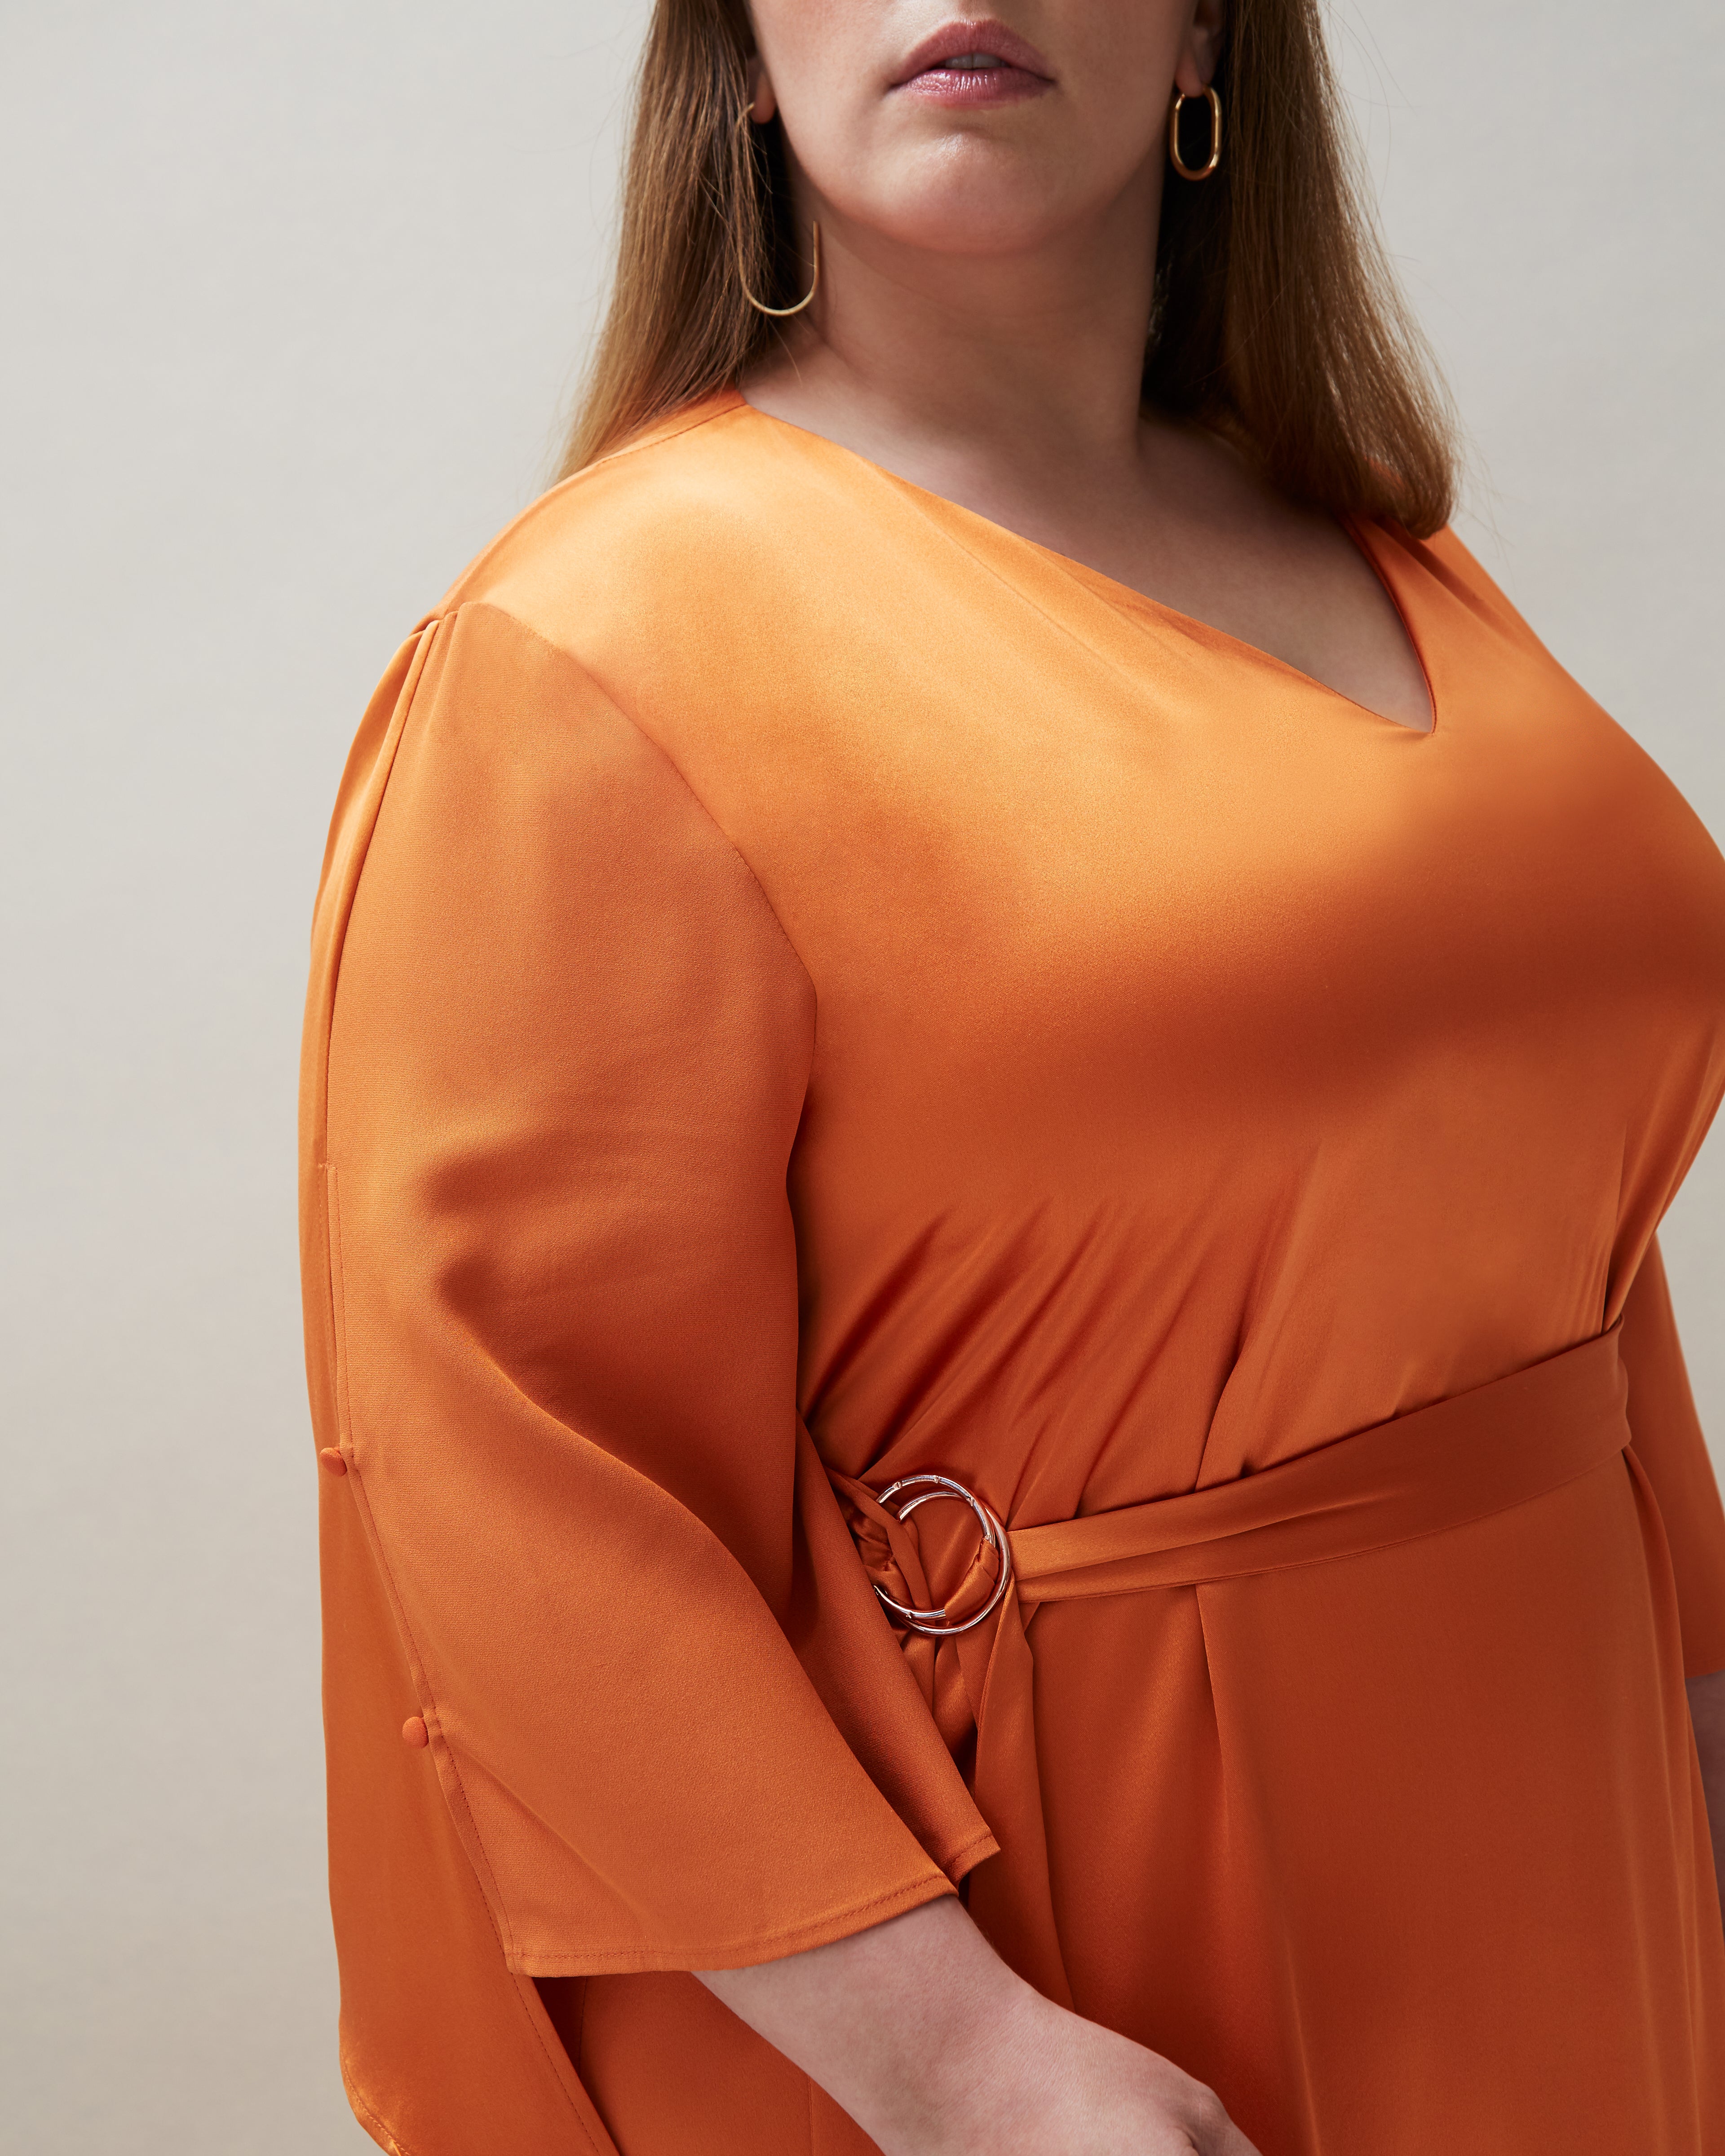 Dua Dress in Orange - COYAN - Plus size